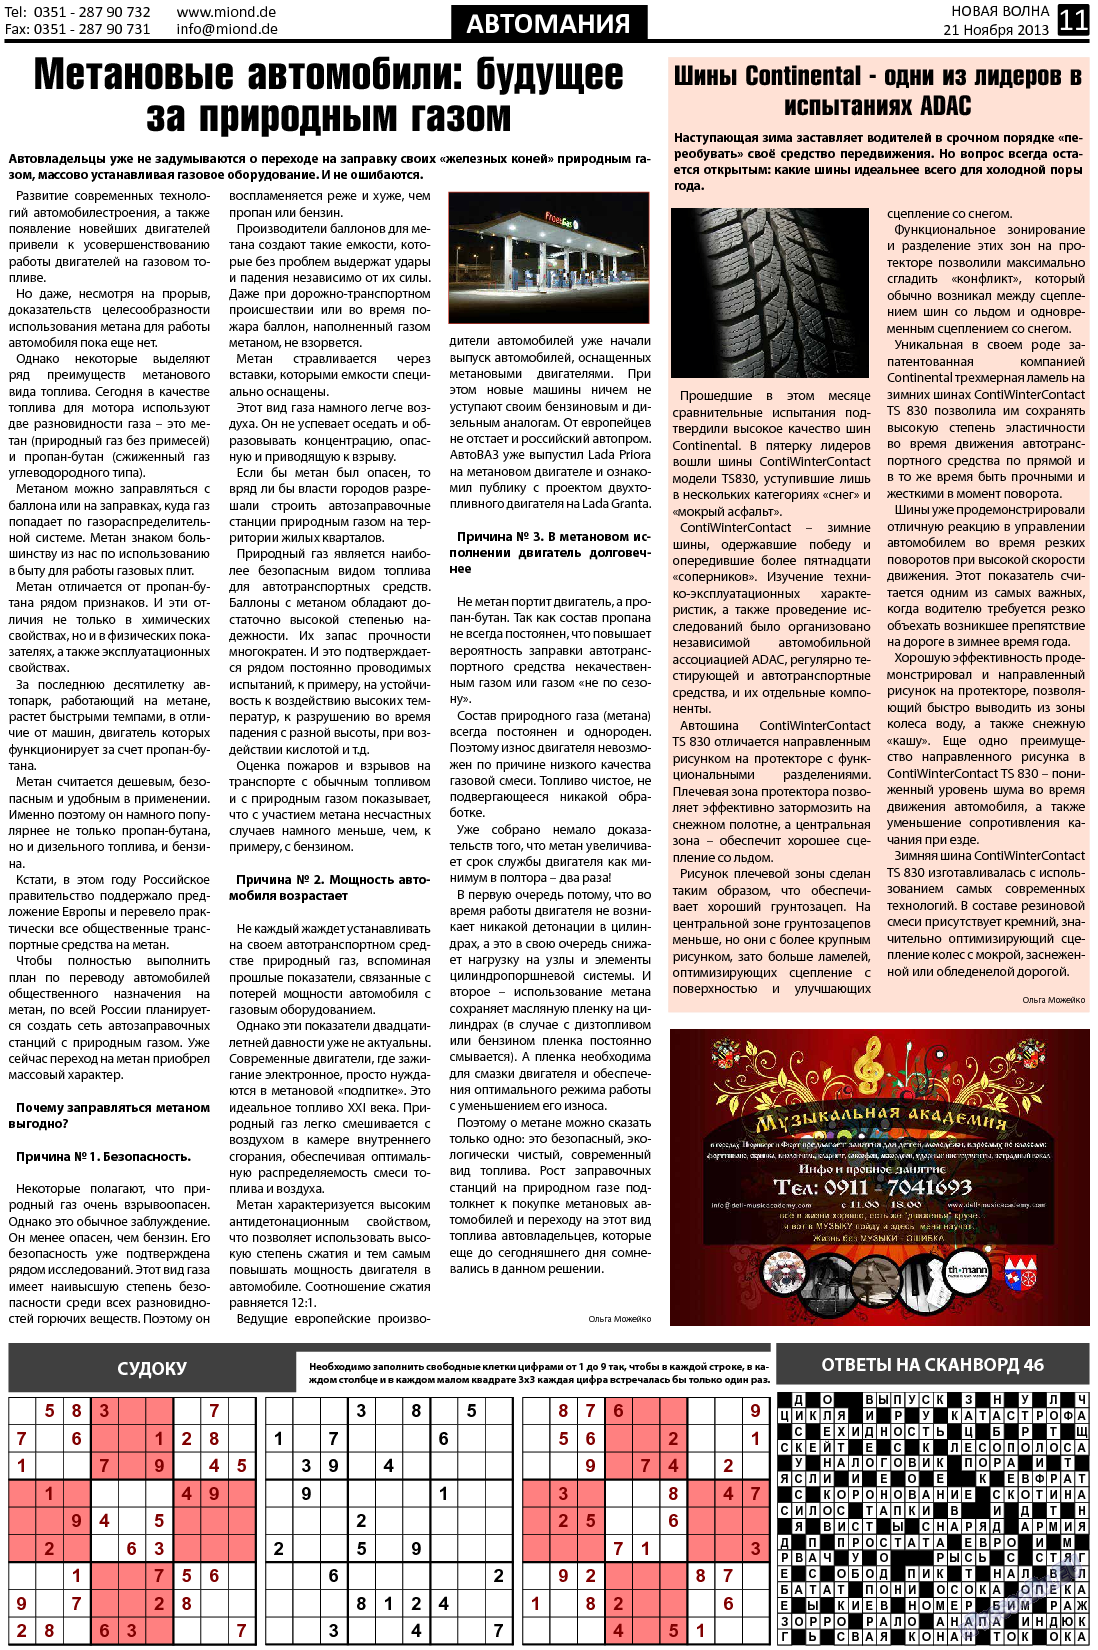 Новая Wолна, газета. 2013 №47 стр.11